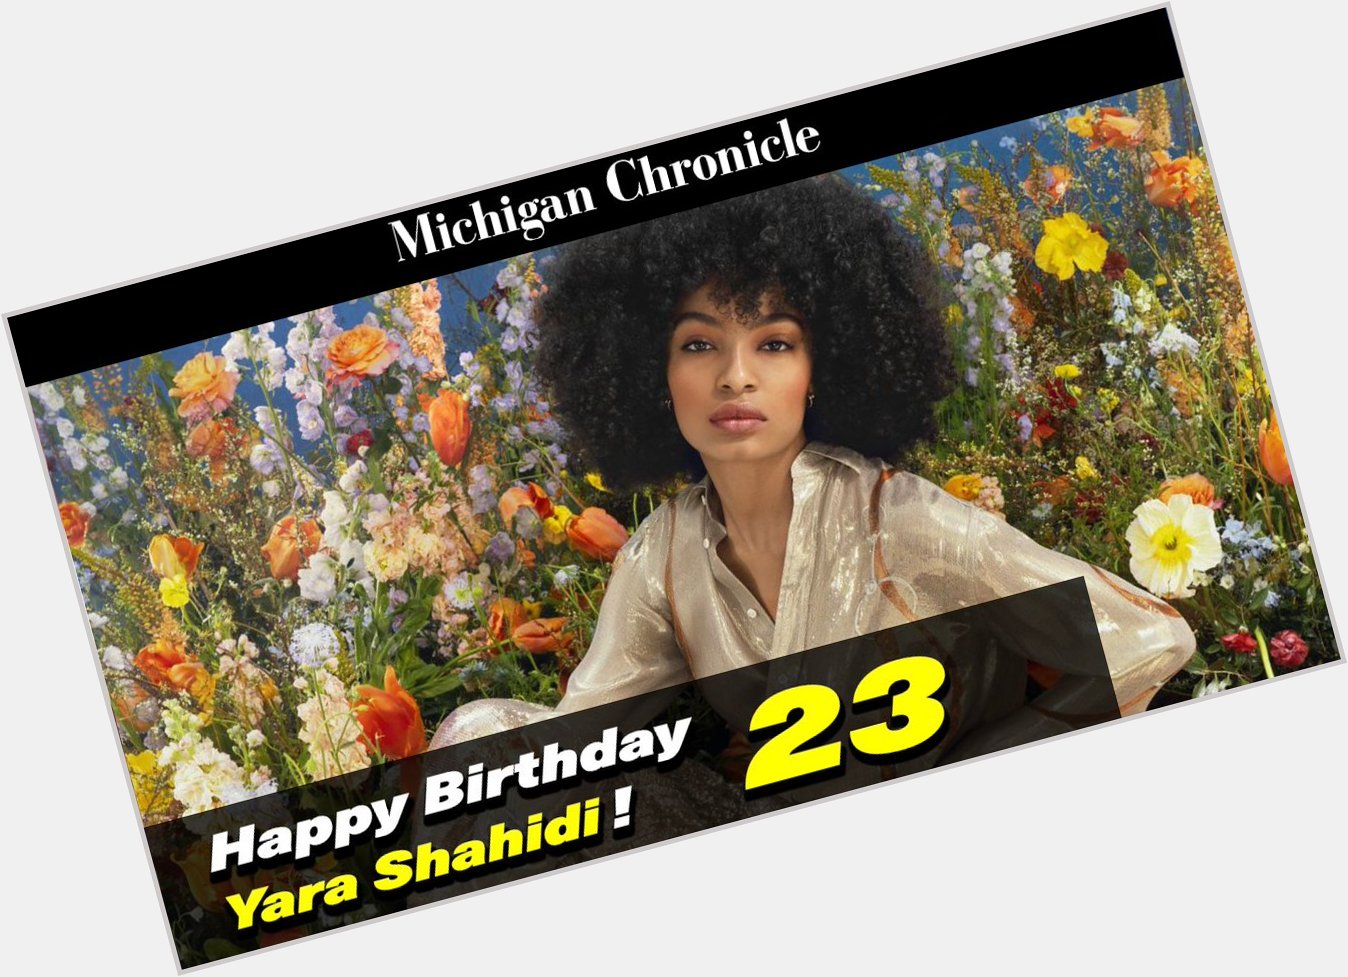 Happy birthday to the incredible Yara Shahidi who turns 23 today    